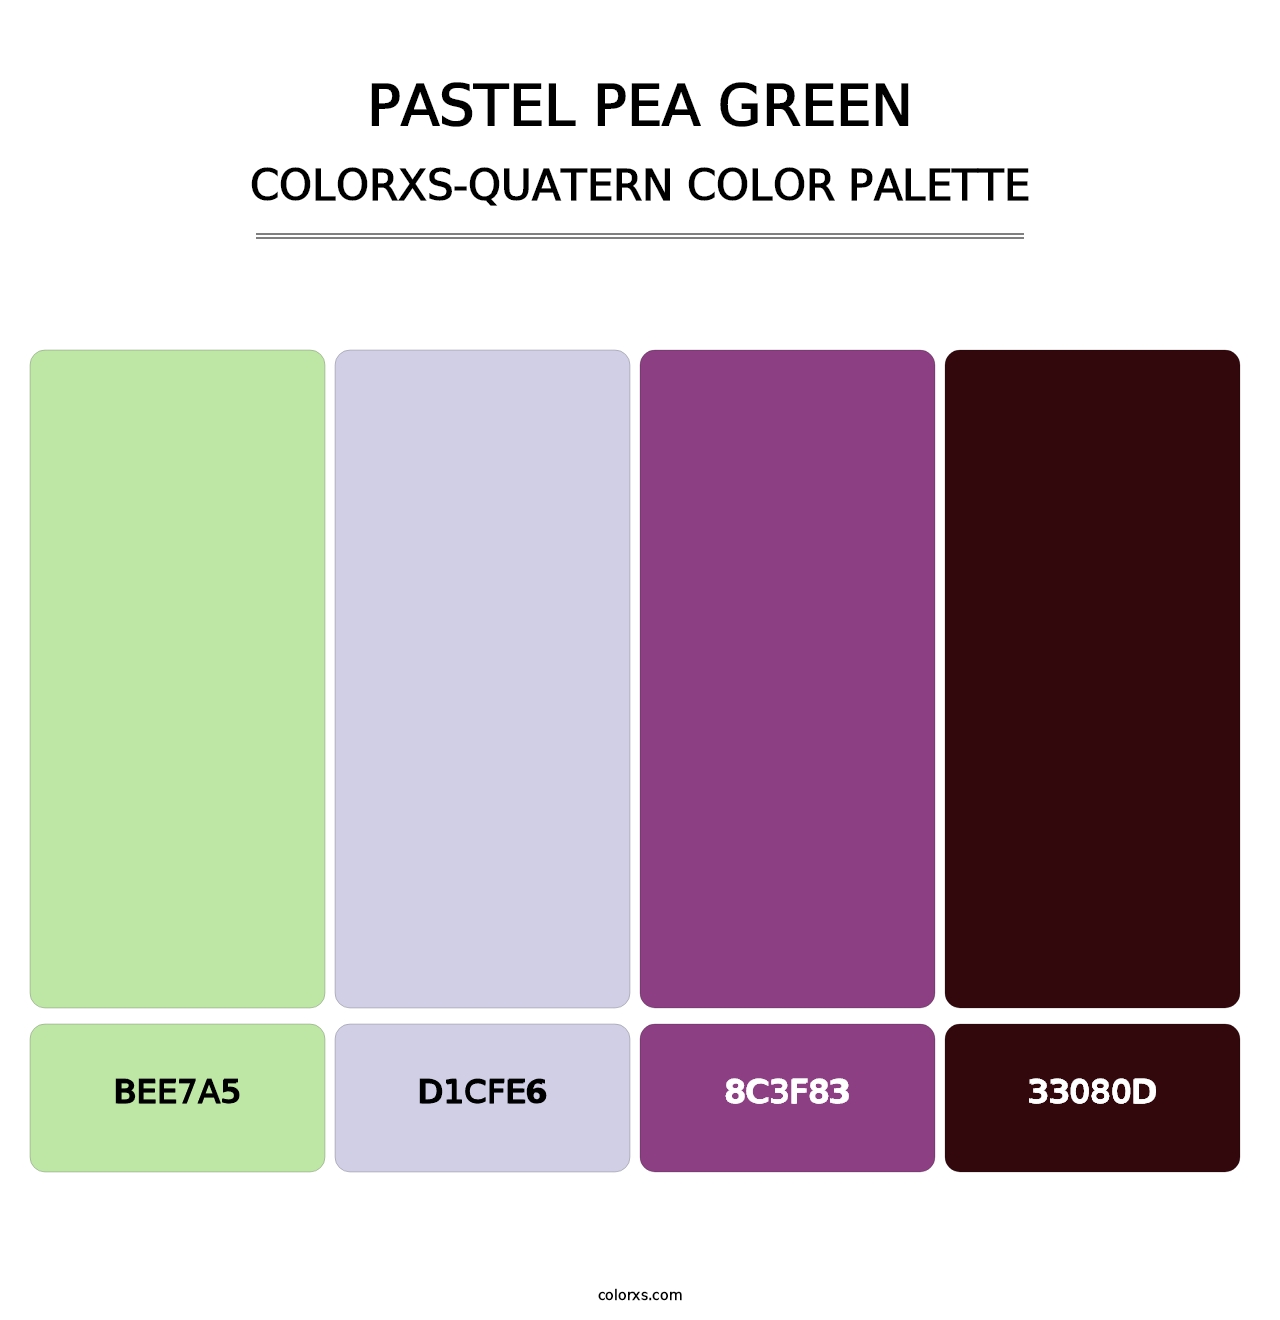 Pastel Pea Green - Colorxs Quatern Palette